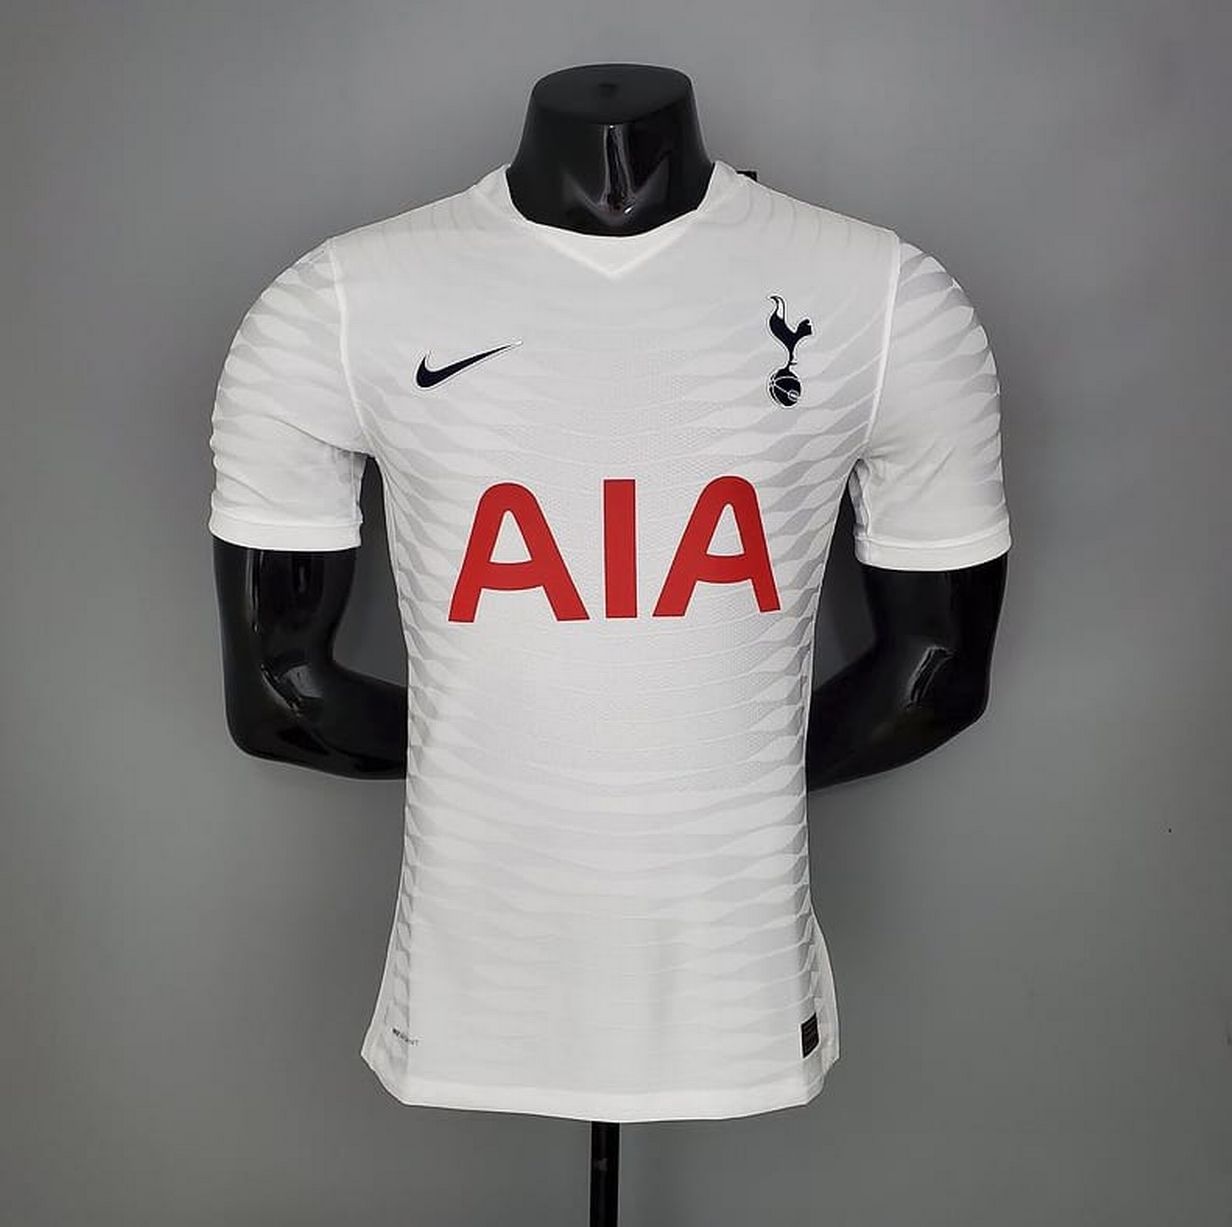 Images Of The New Tottenham Hotspur Elite Home Kit Leaked Online